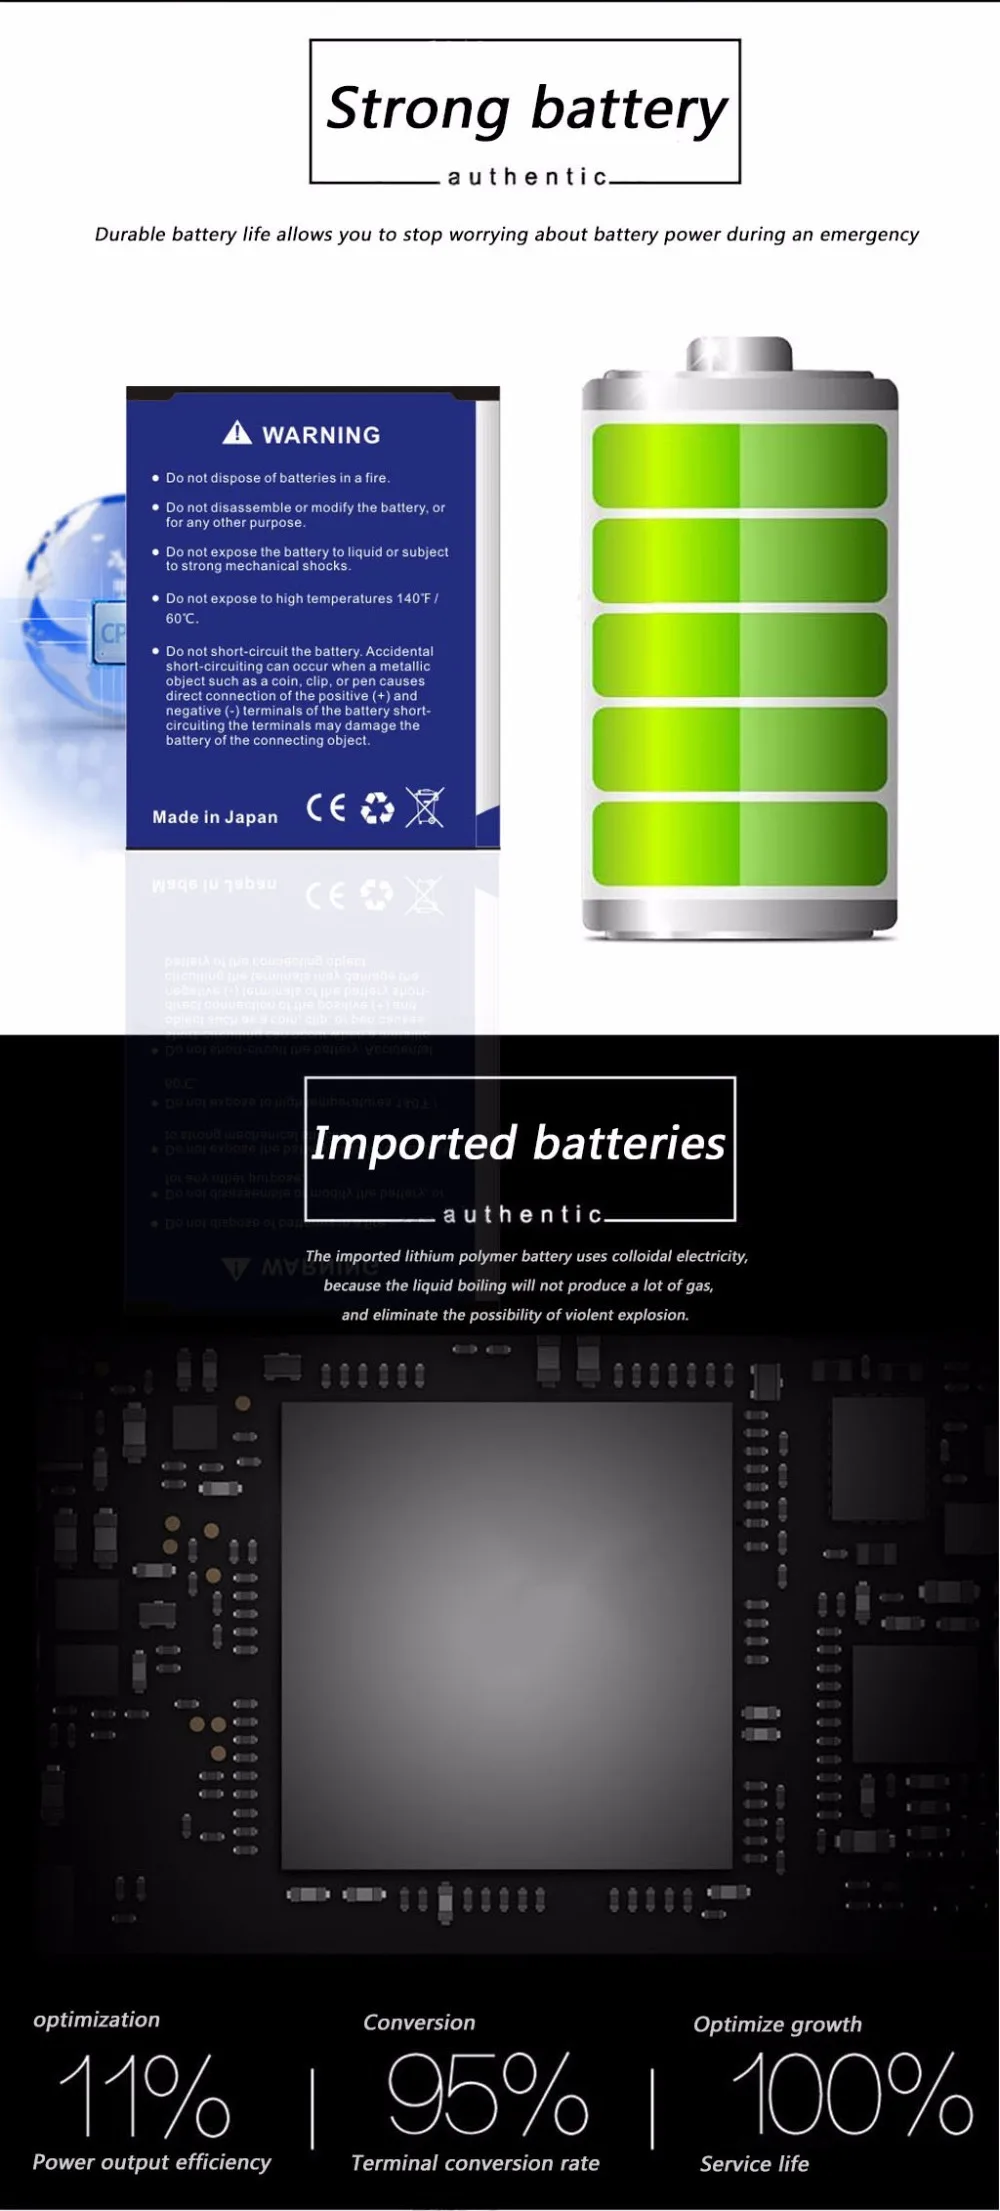 Da Xiong 3700 мАч BL-T5 батарея для LG Nexus 4 E960 E975 E973 F180 LS970 Optimus G E970 батарея мобильного телефона